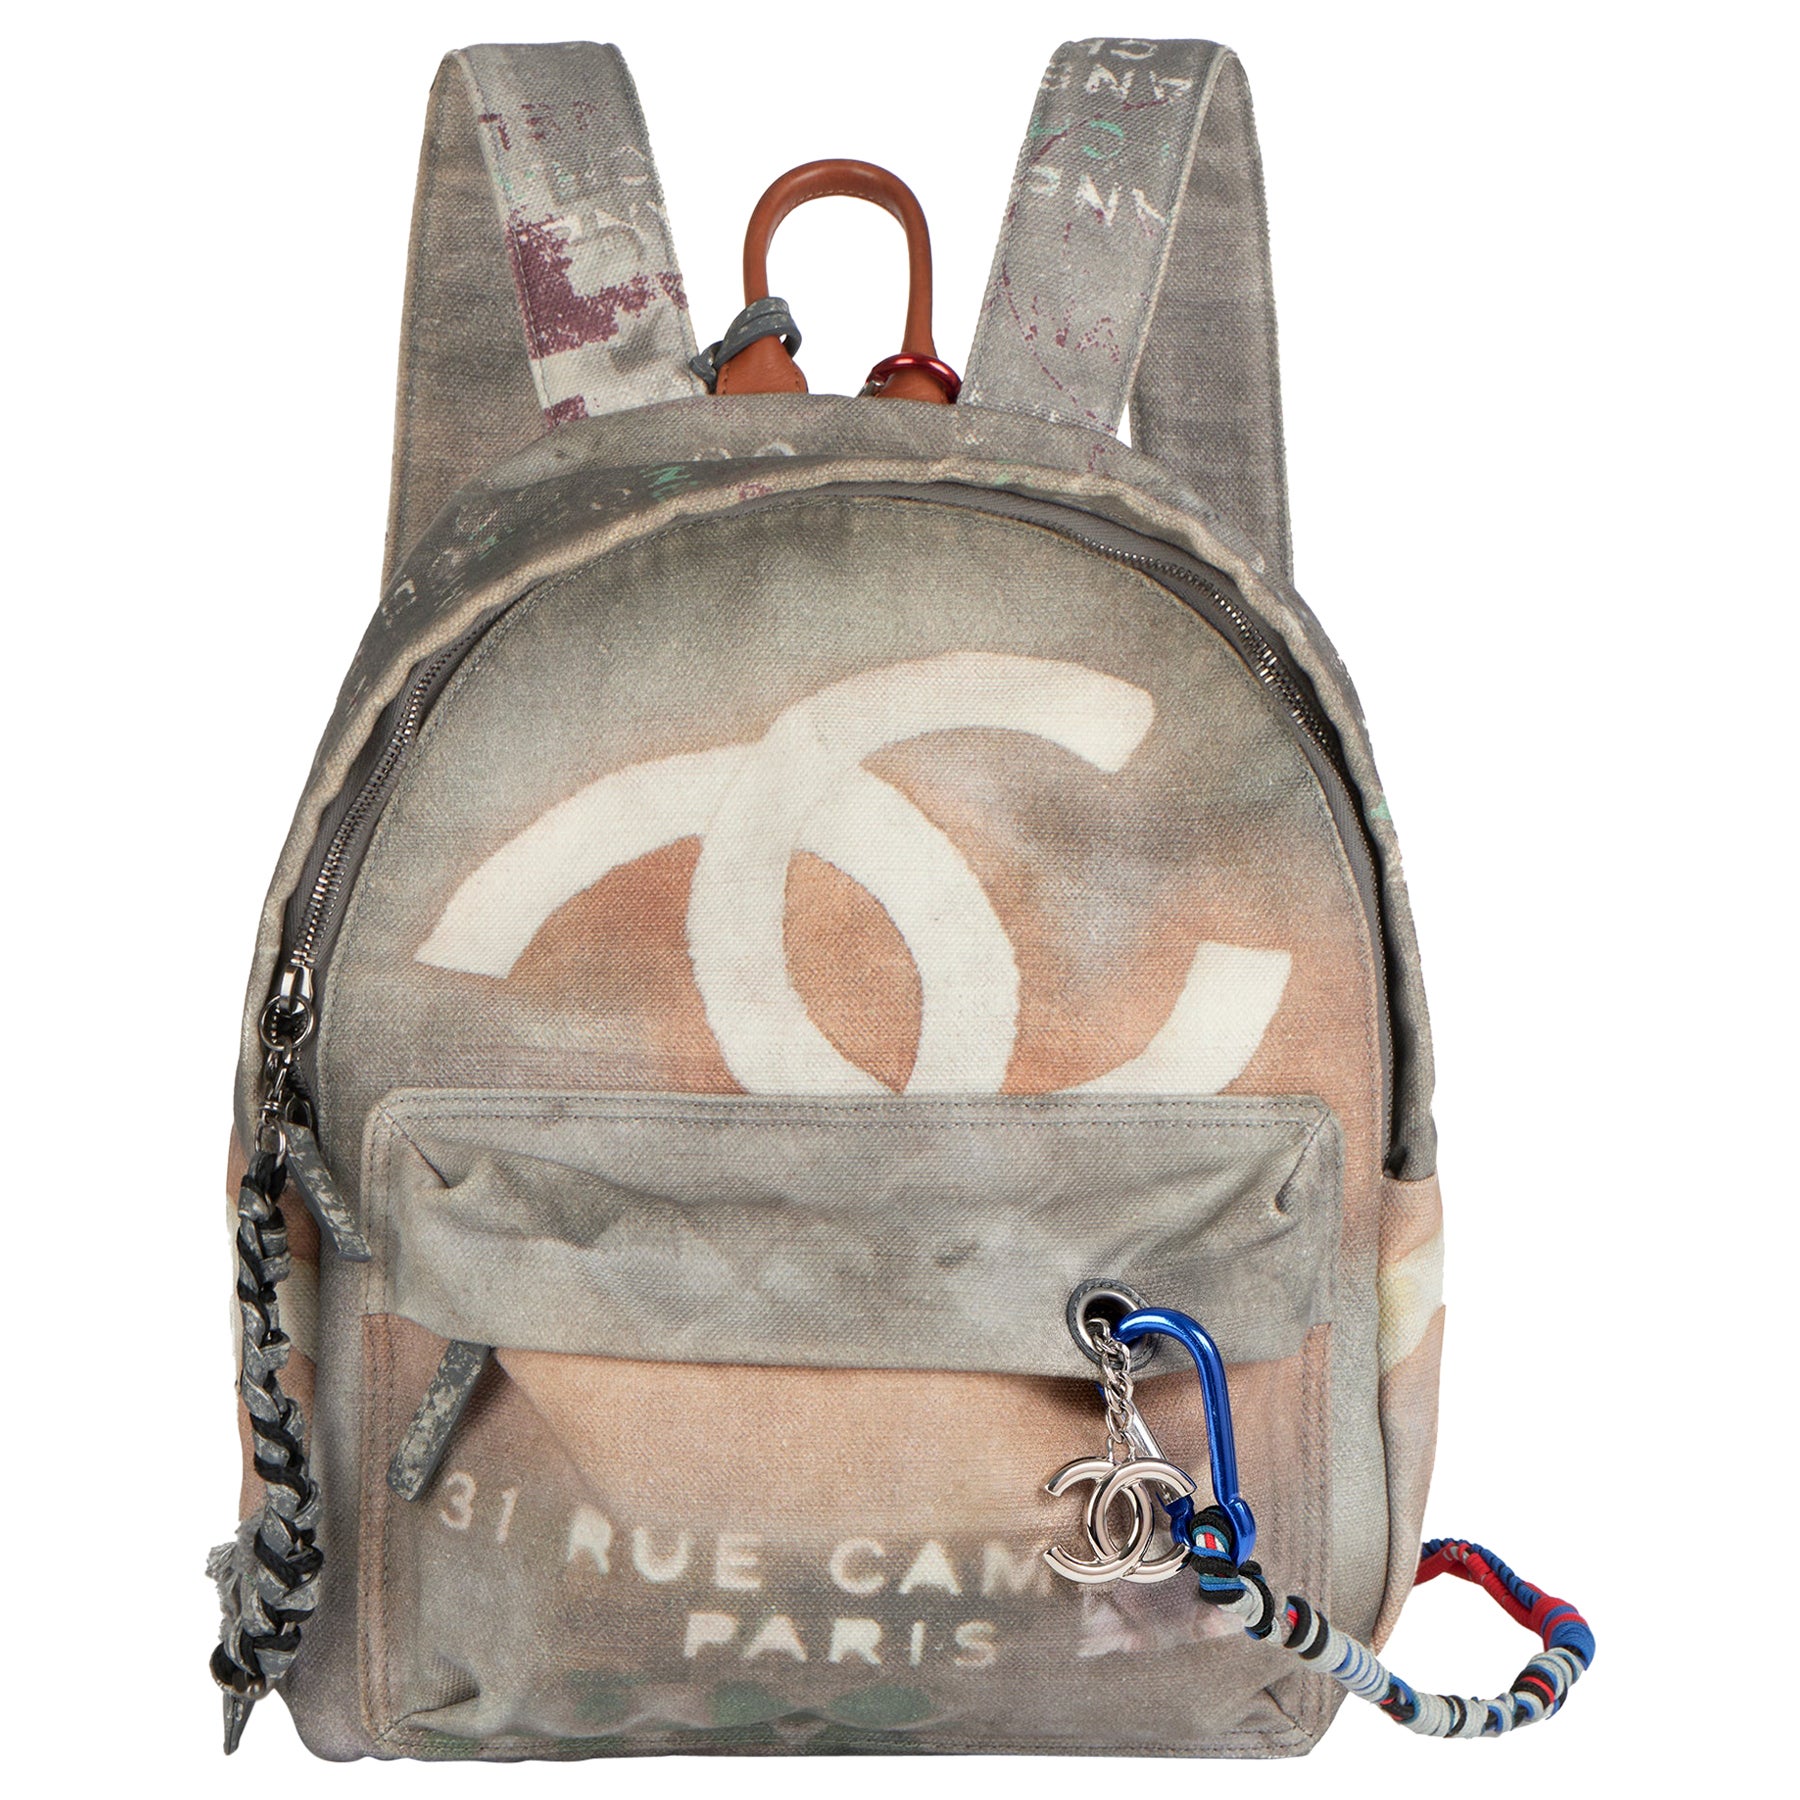 Graffiti cloth backpack